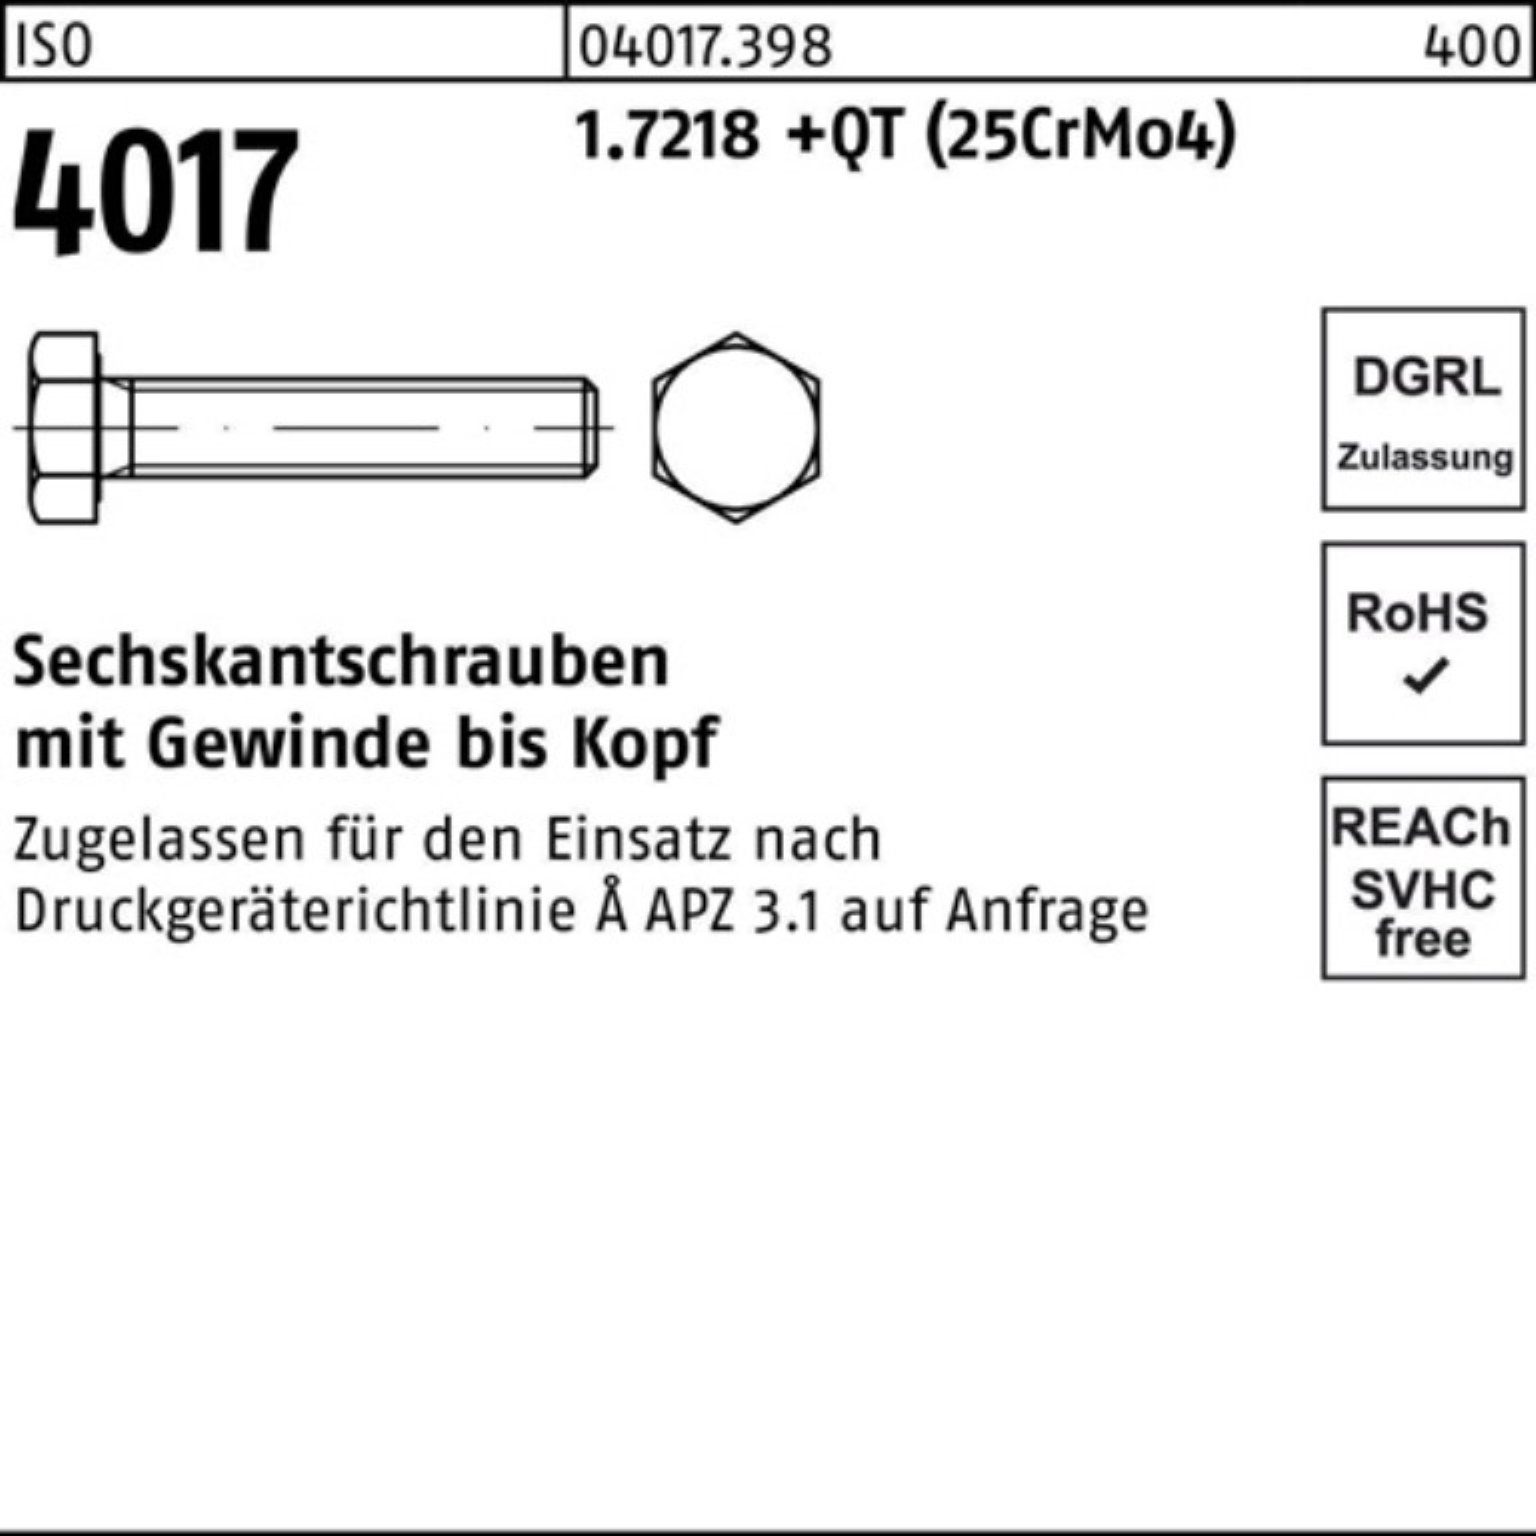 +QT ISO 100er Bufab VG Pack M27x 4017 Sechskantschraube (25CrMo4) 140 Sechskantschraube 1.7218